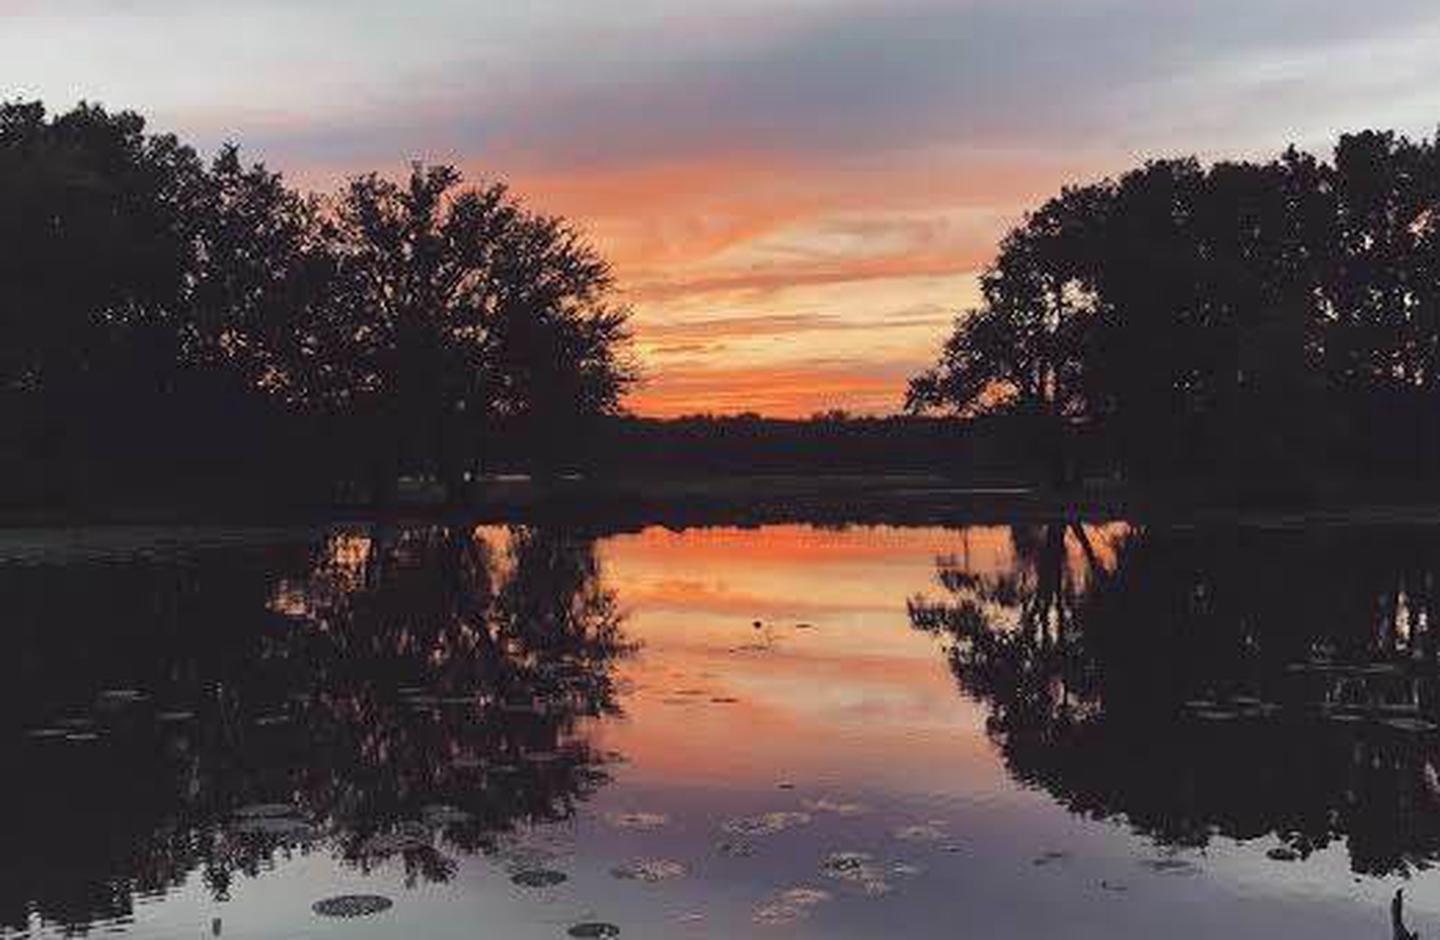 SunsetSunset on the banks of the Mississippi River at Blackhawk Park